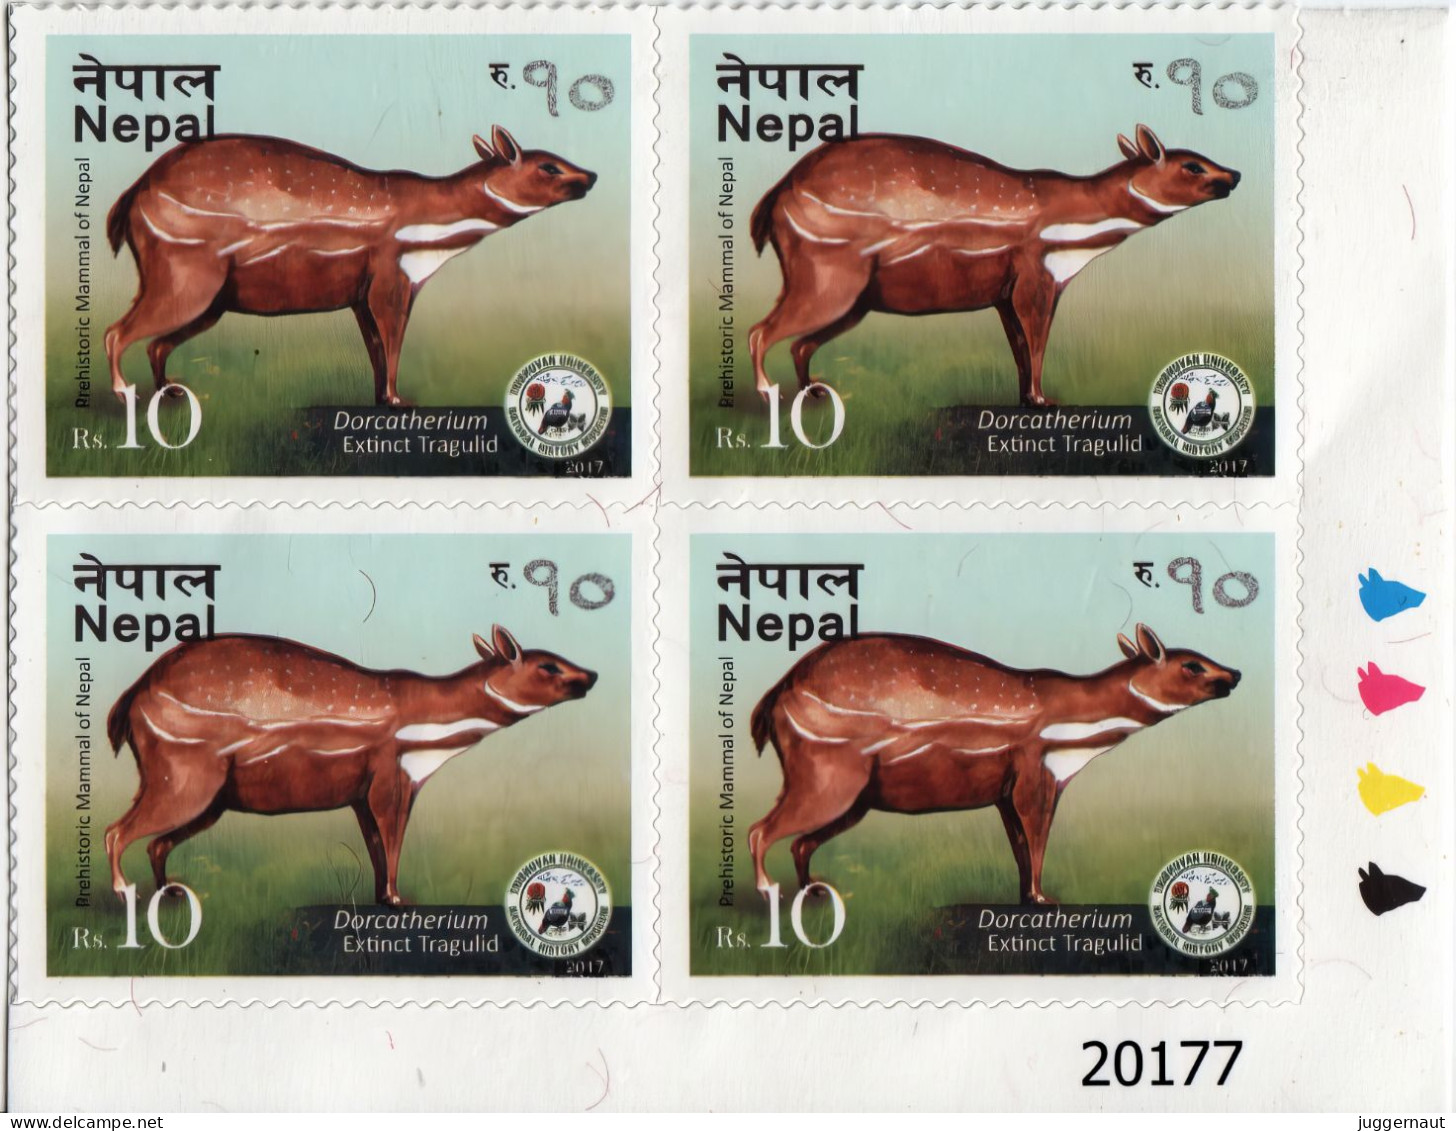 Extinct Tragulid Adhesive Postage Stamp Traffic Lights Block 2017 Nepal MNH - Wild